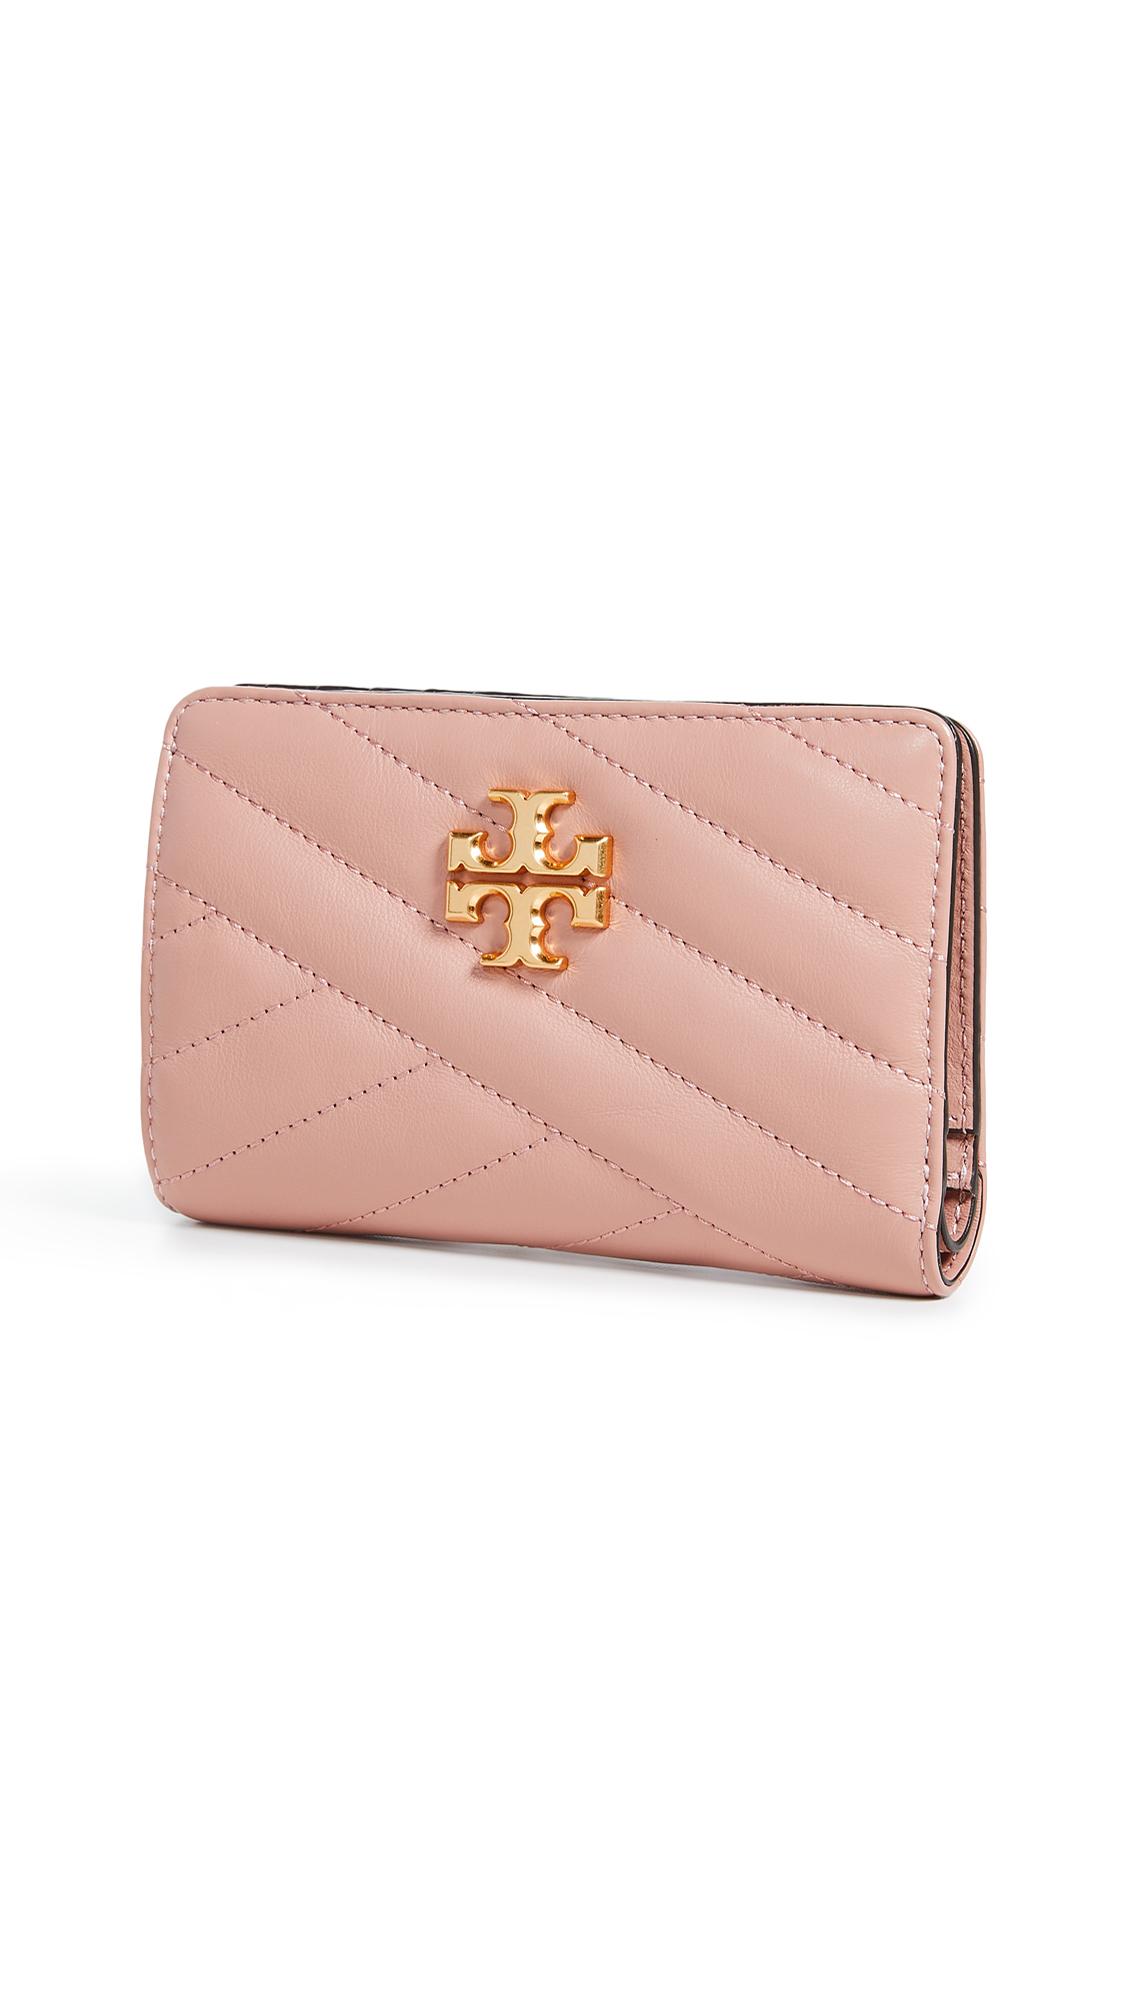 Tory Burch, Bags, Kira Chevron Chain Wallet Brand New In Bag Pink Moon